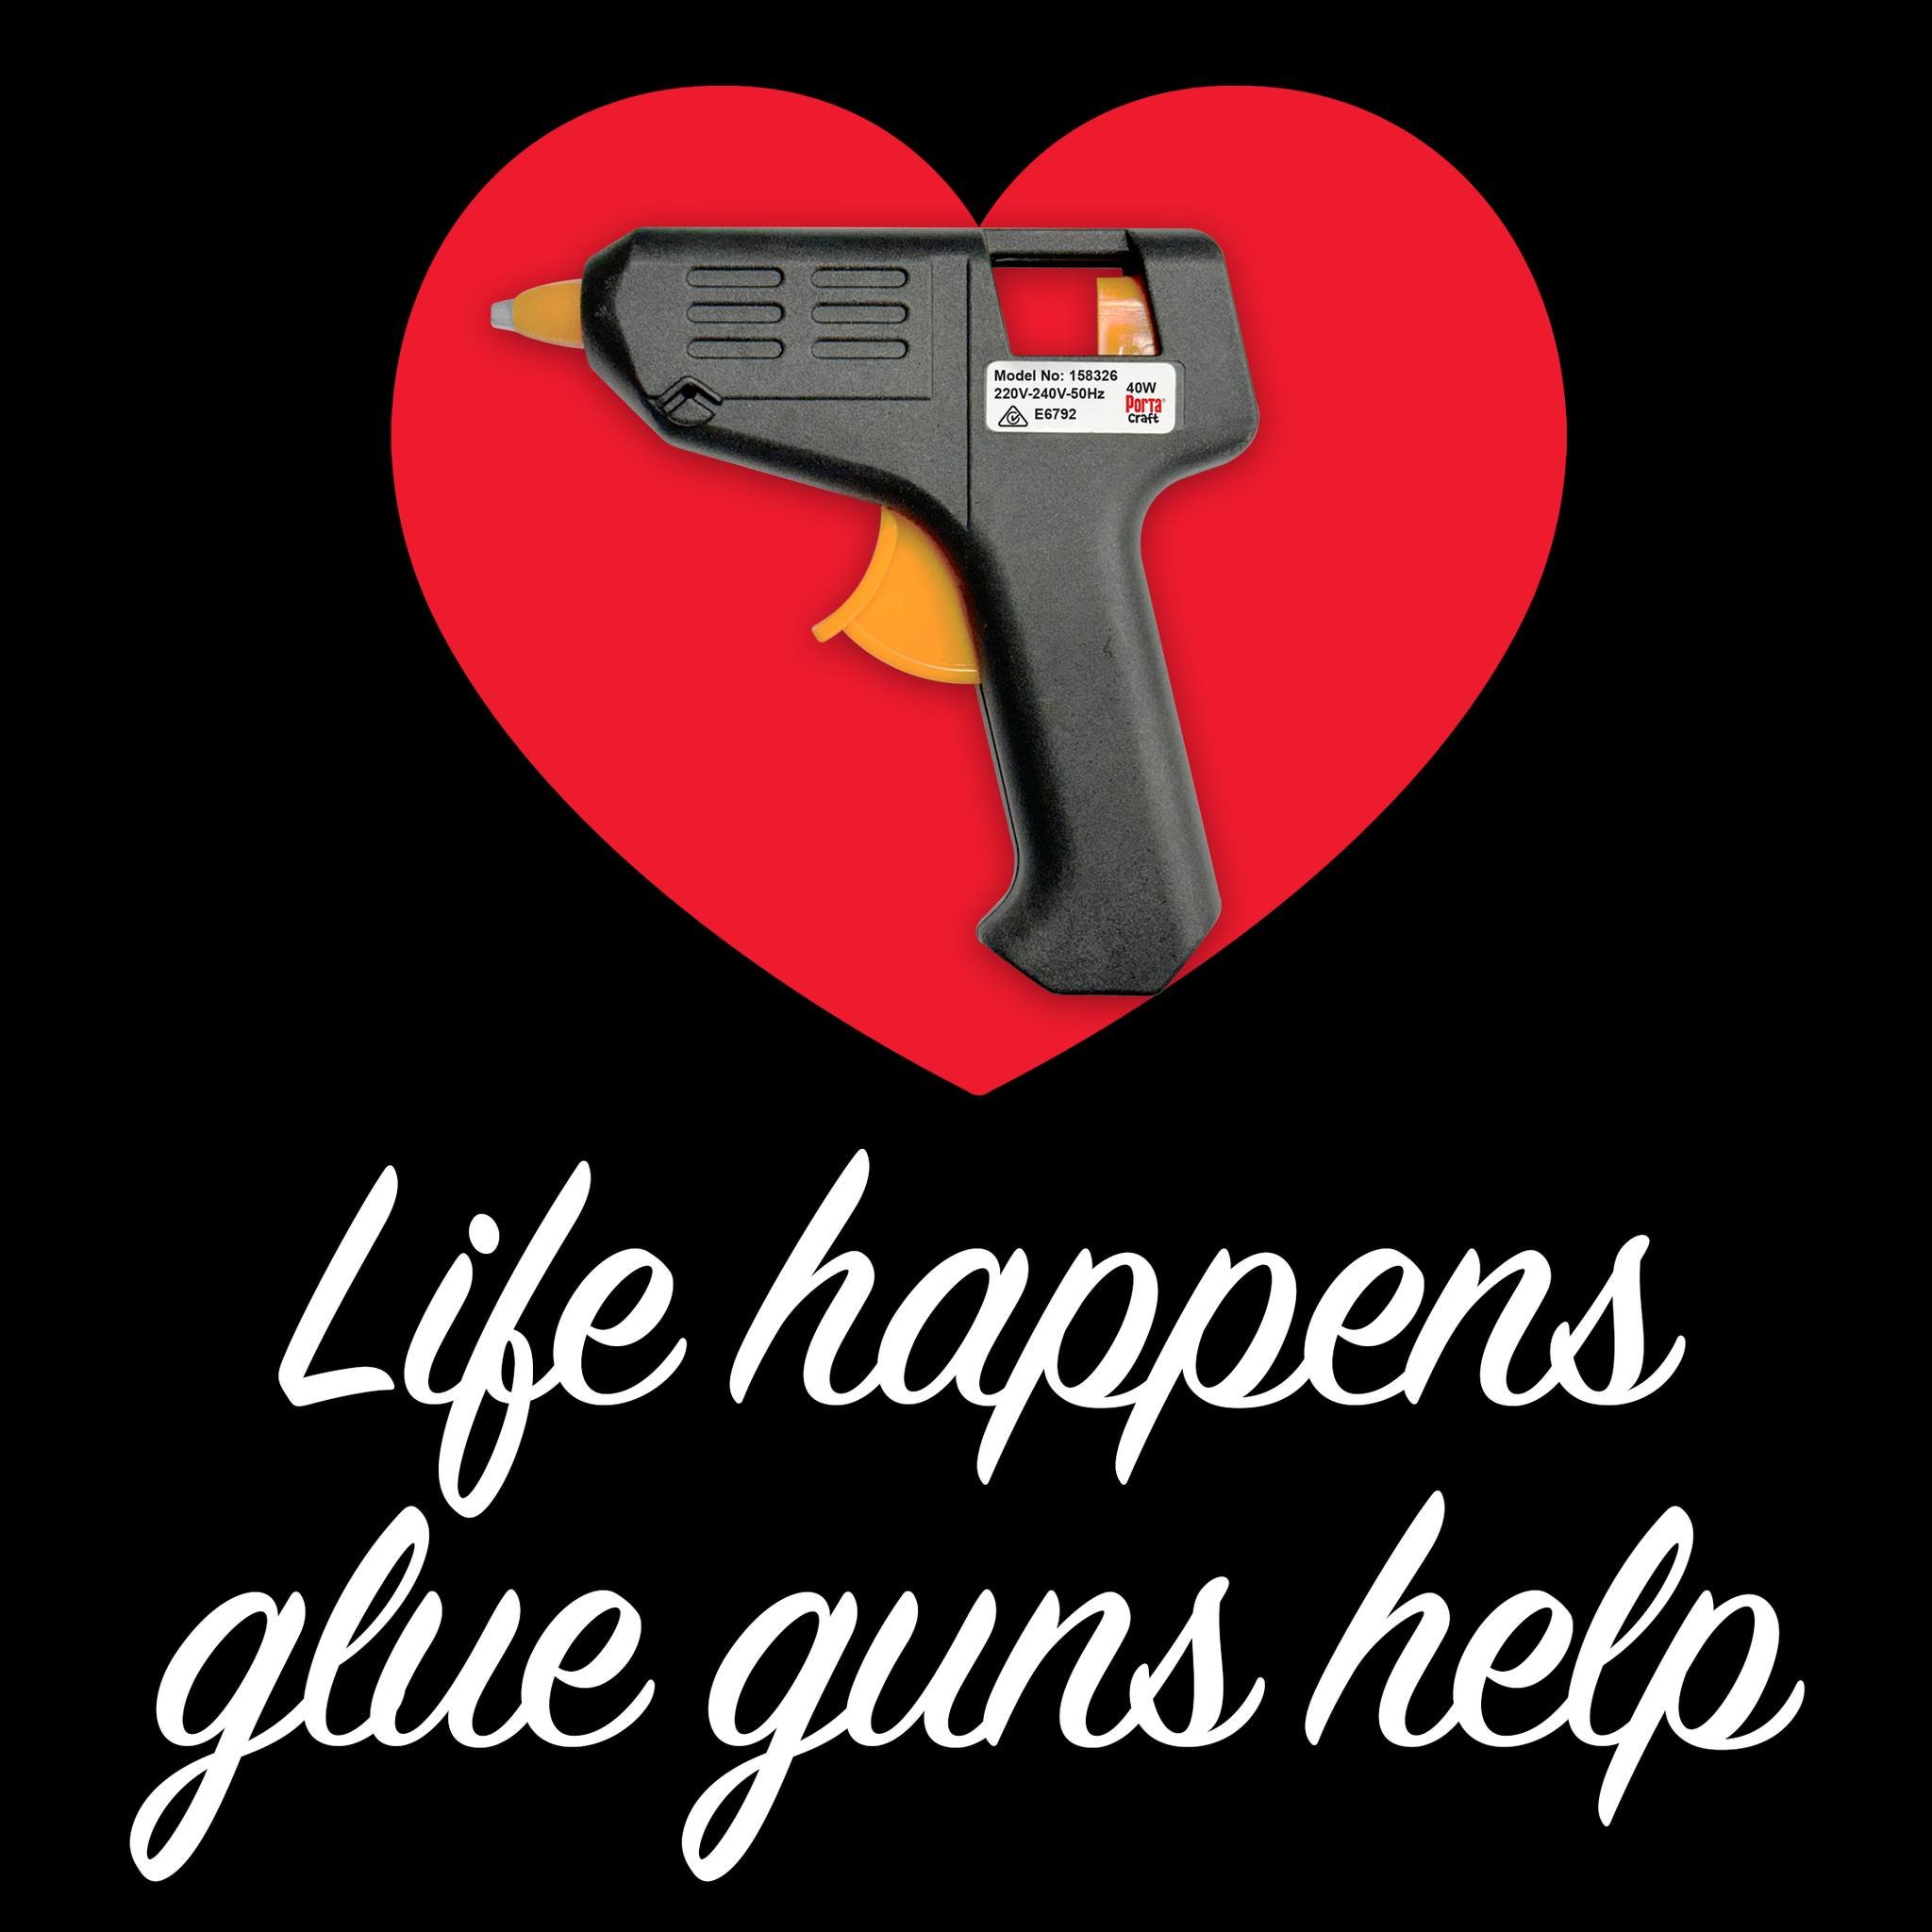 Friend for life❤️
10 Watt and 40 Watt glue guns. What are you waiting for?😄

#gluegun #glueguns #glue #craft #make #create #hobby #wecreateyoumake